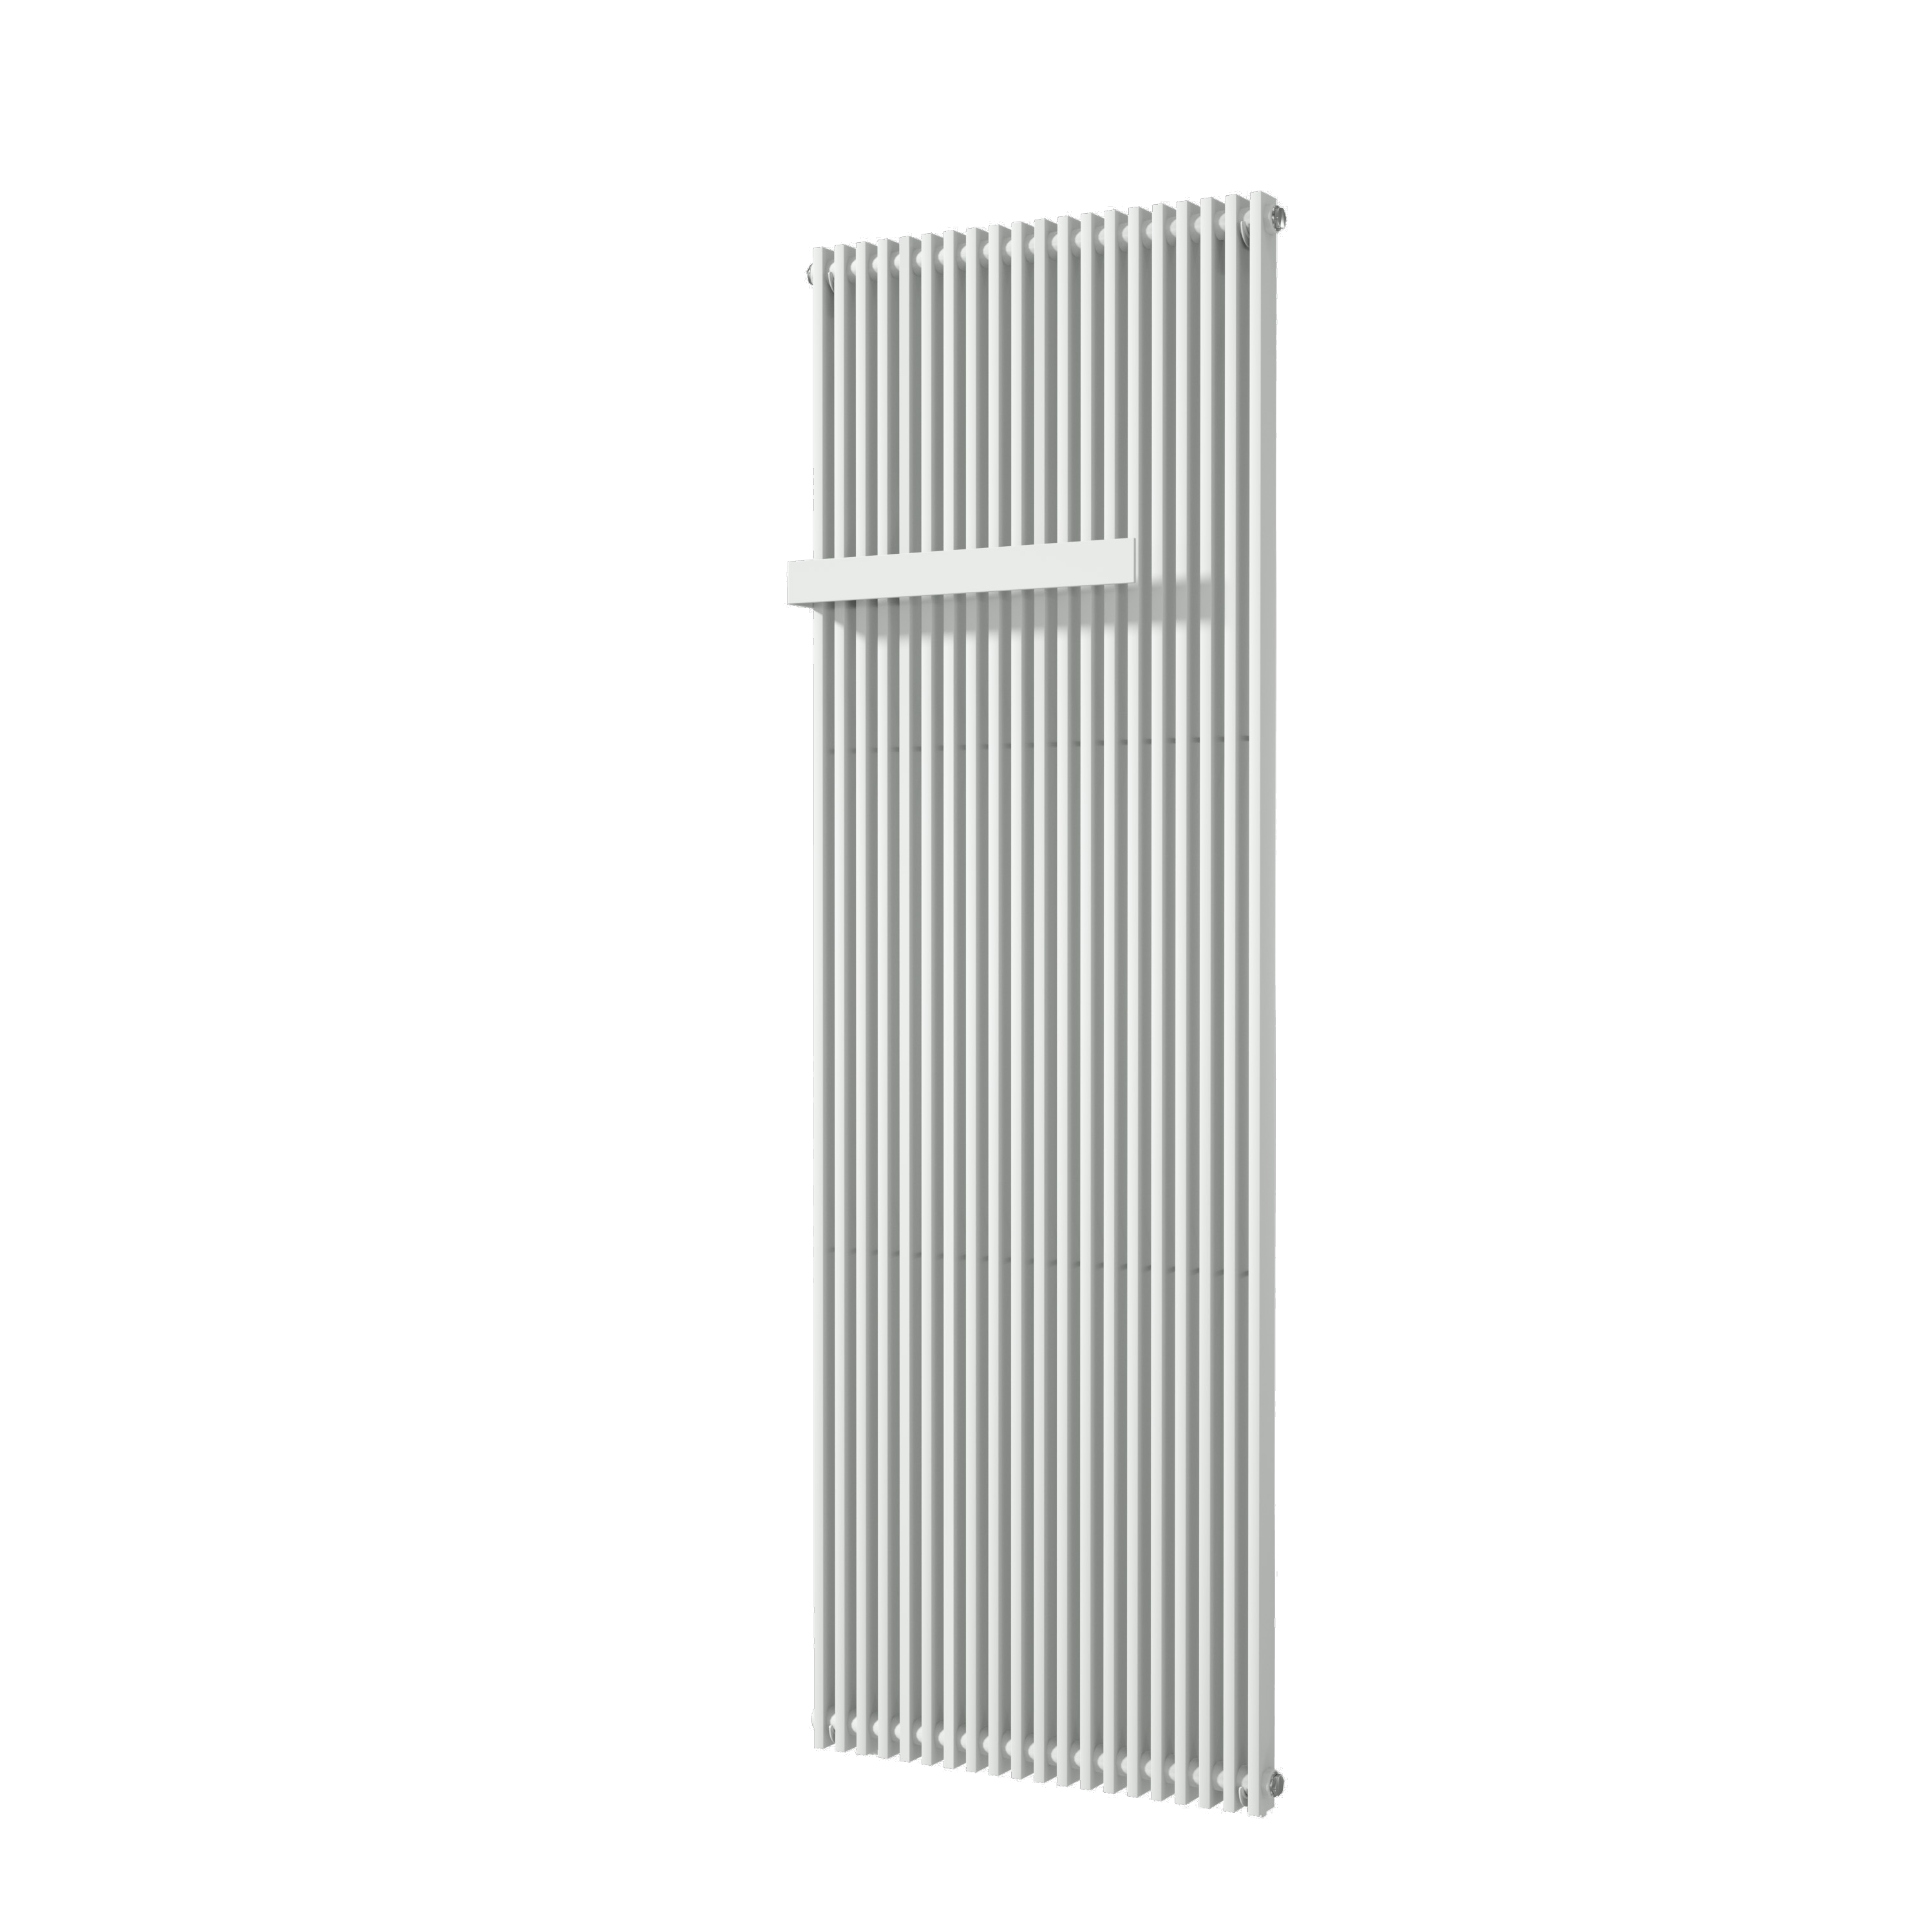 Vipera Corrason enkele badkamerradiator 60 x 180 cm centrale verwarming mat wit zijaansluiting 2,059W